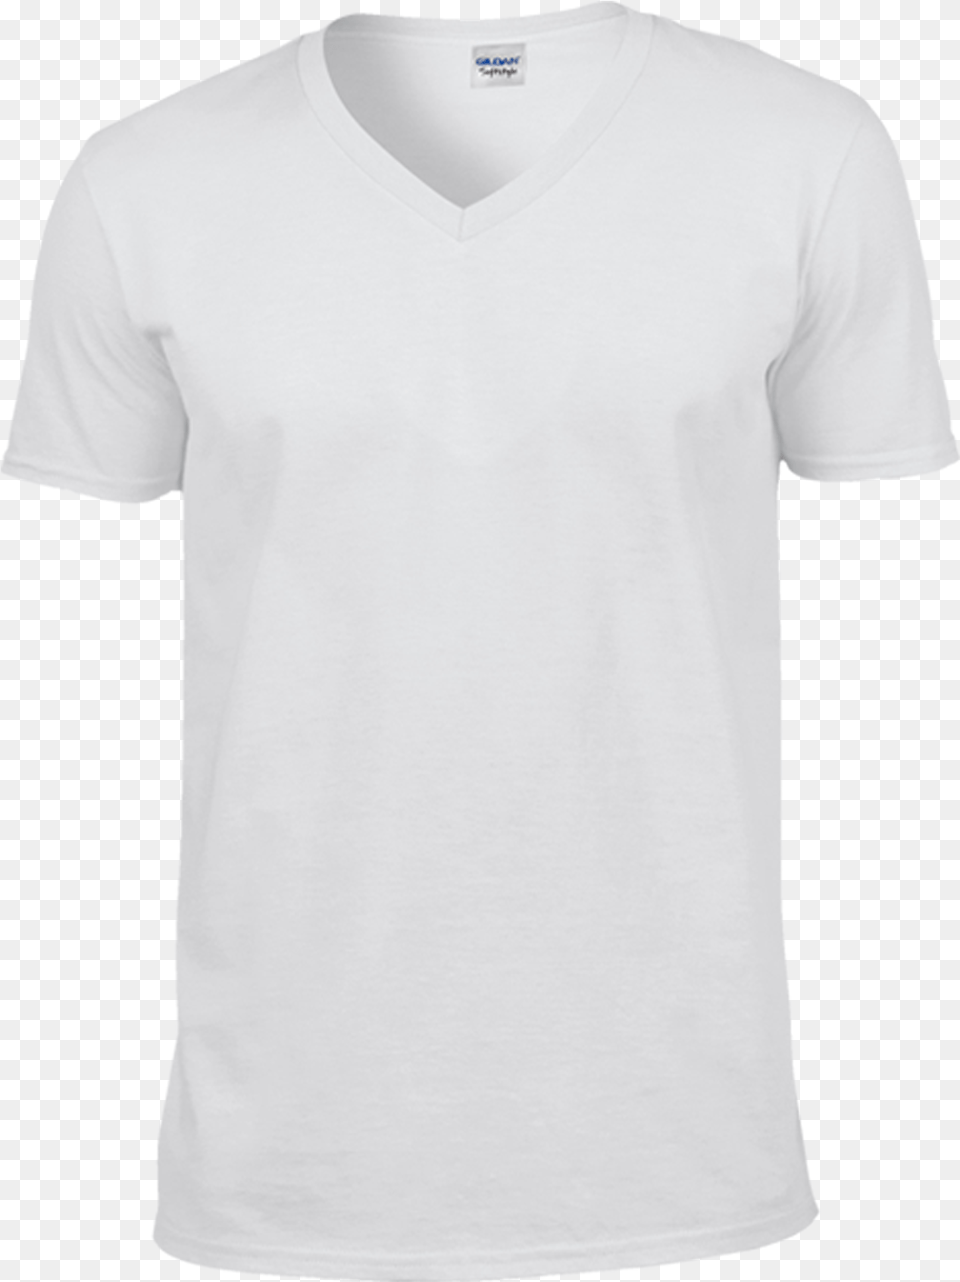 Jerzees Tee 29m White, Clothing, T-shirt, Shirt Png Image